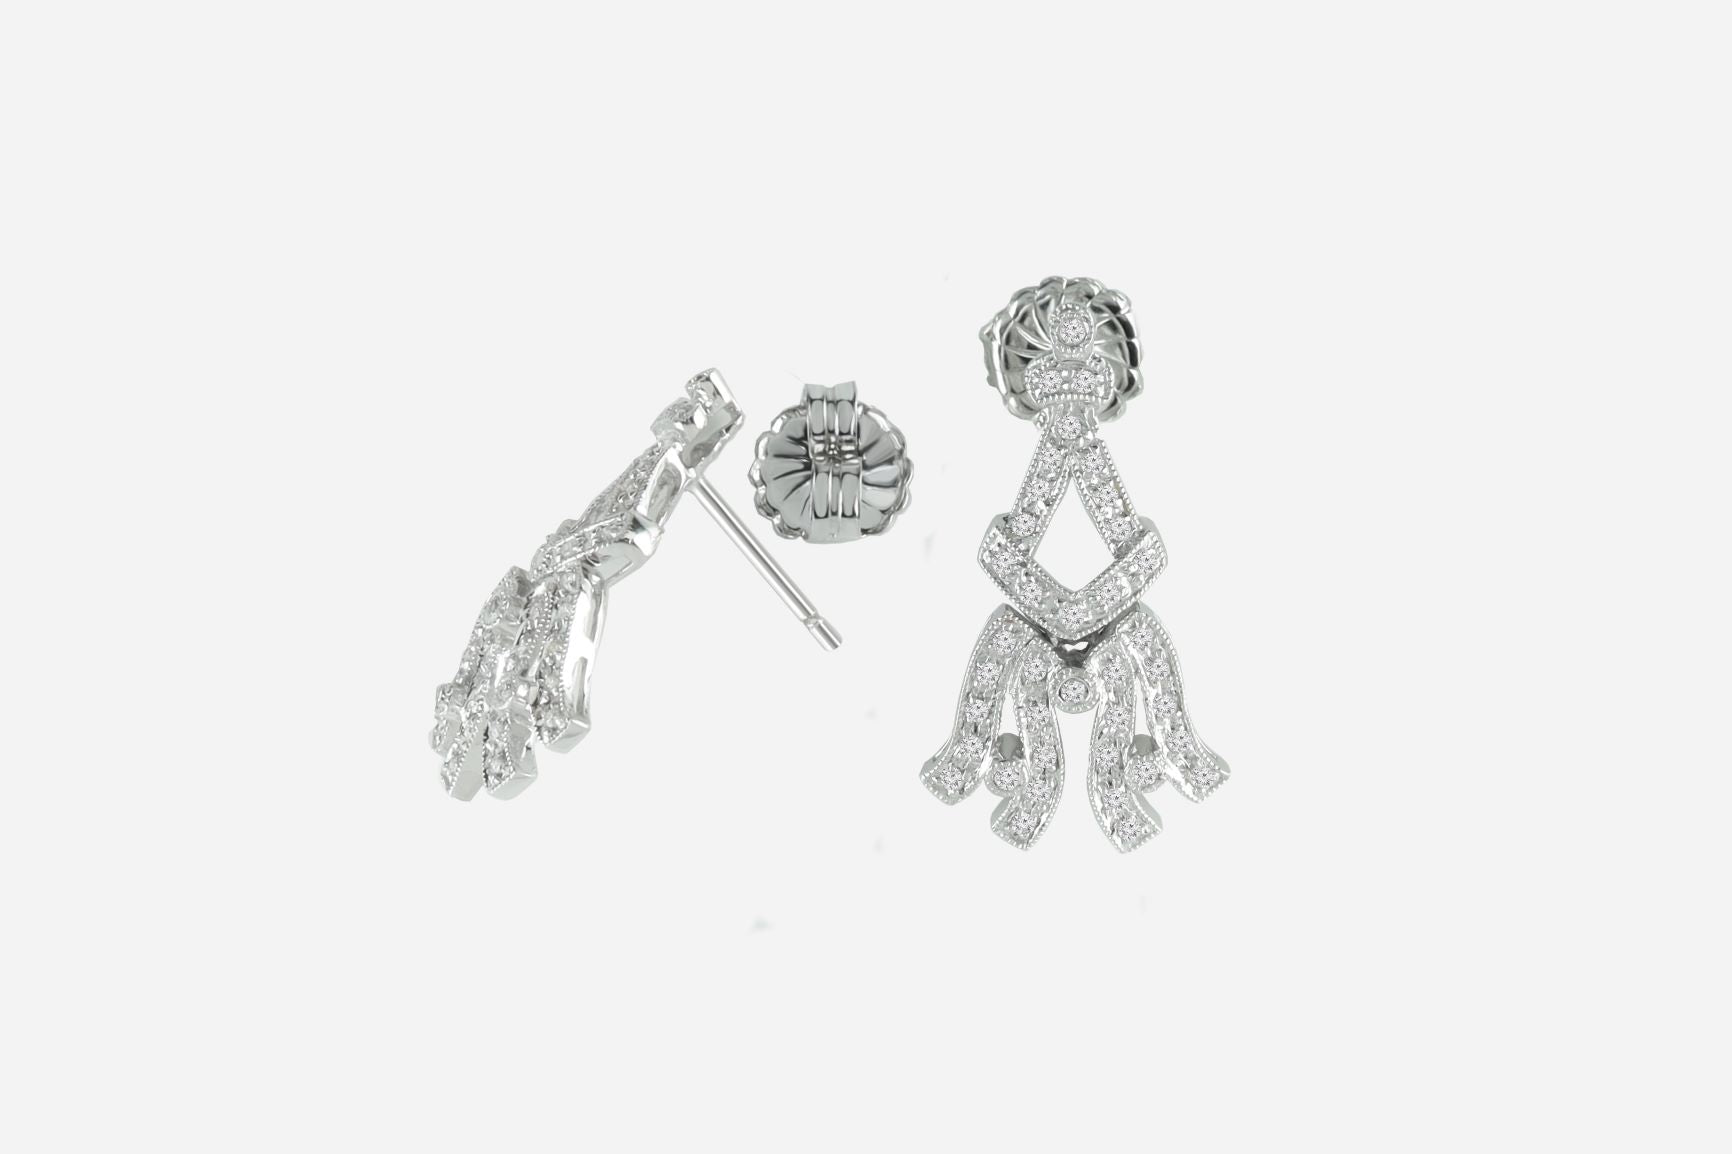 0.50 ctw Diamond Vintage Inspired Earrings